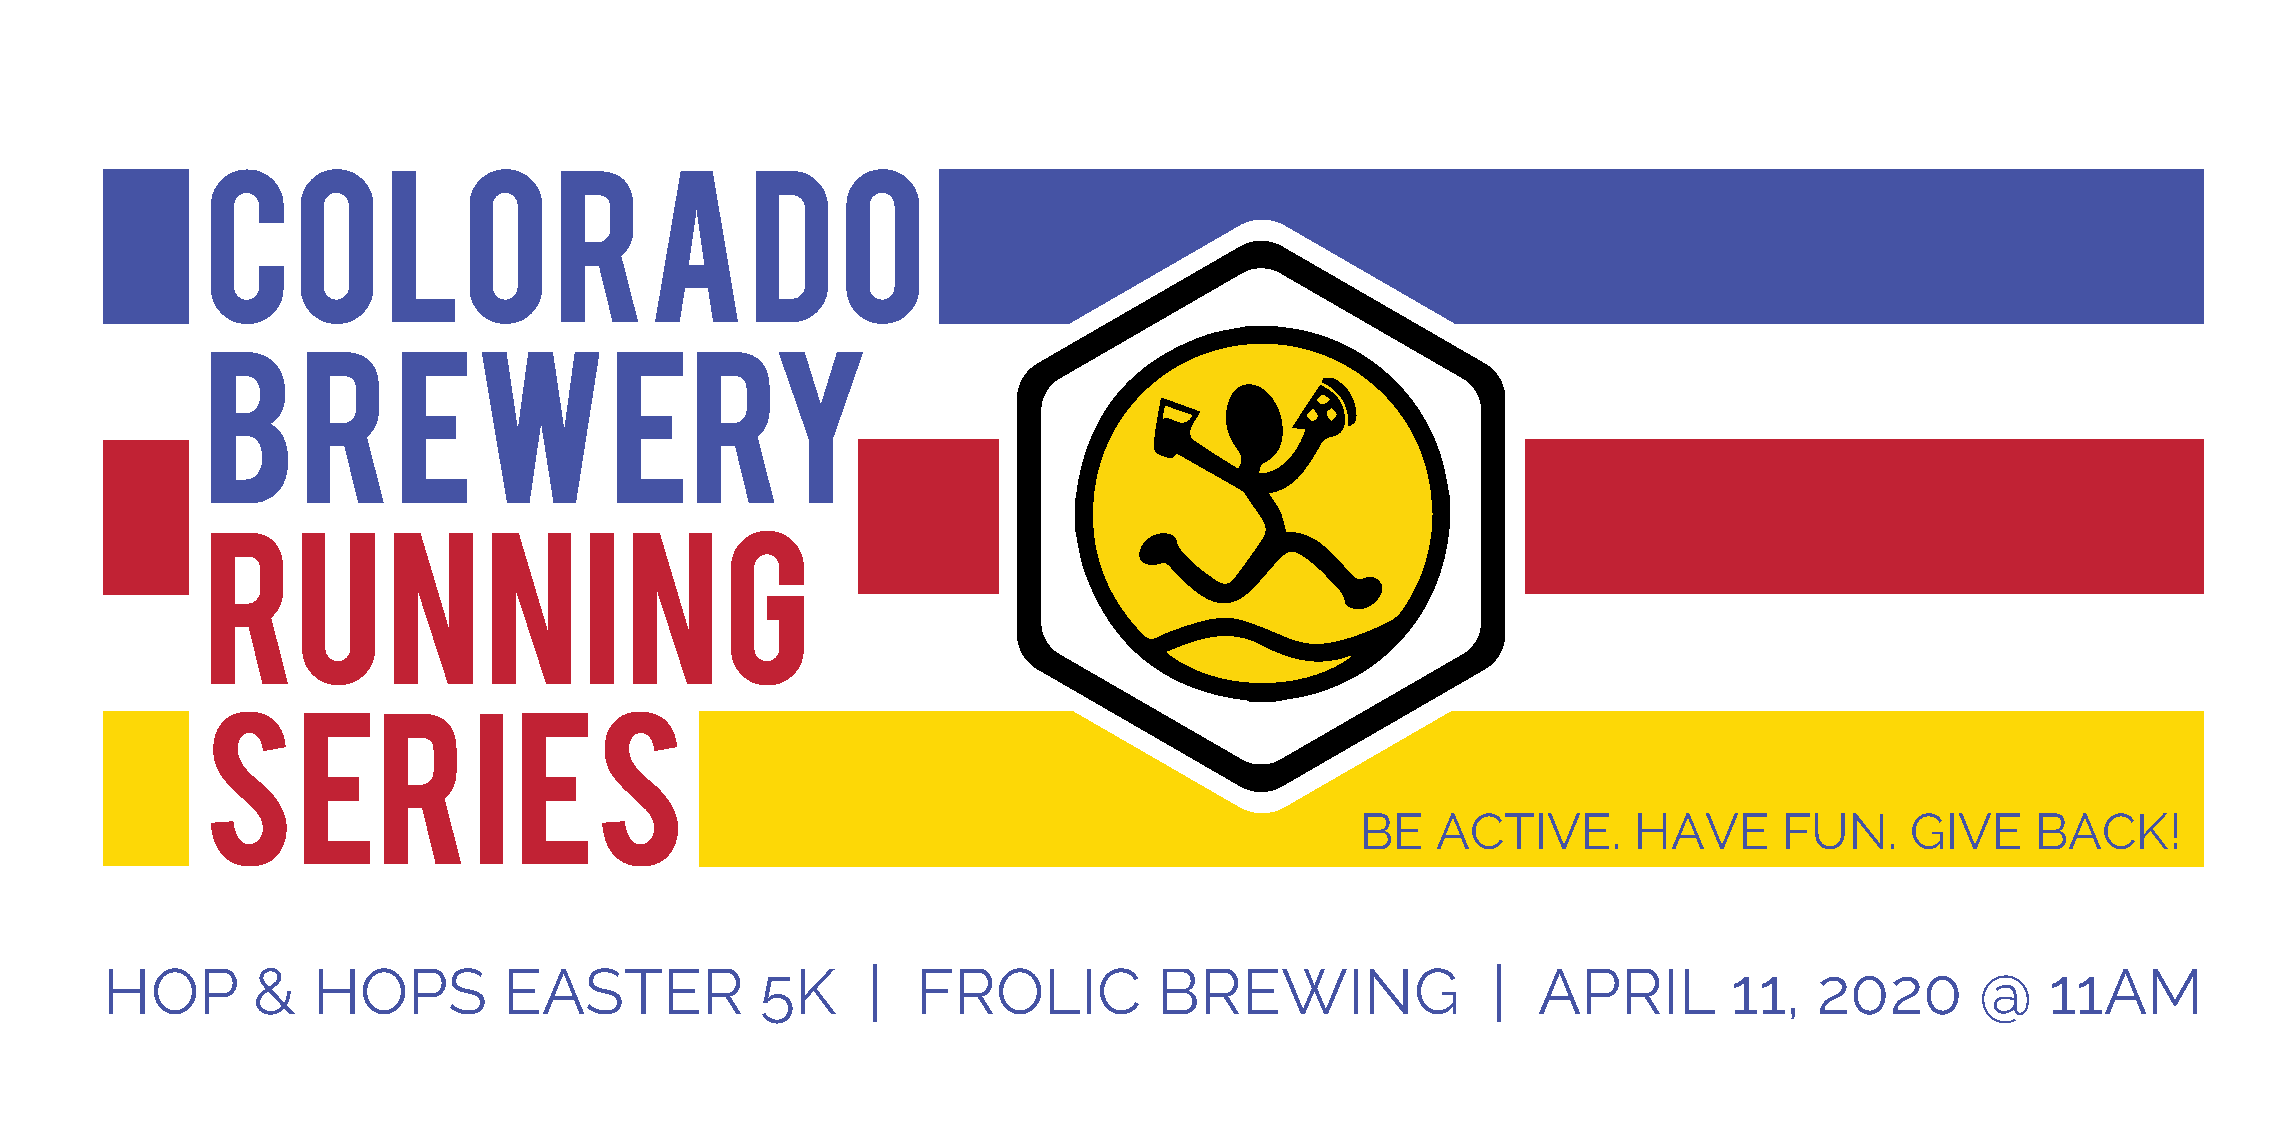 Hop & Hops Easter 5k - Frolic Brewing | Colorado Brewery Running Series